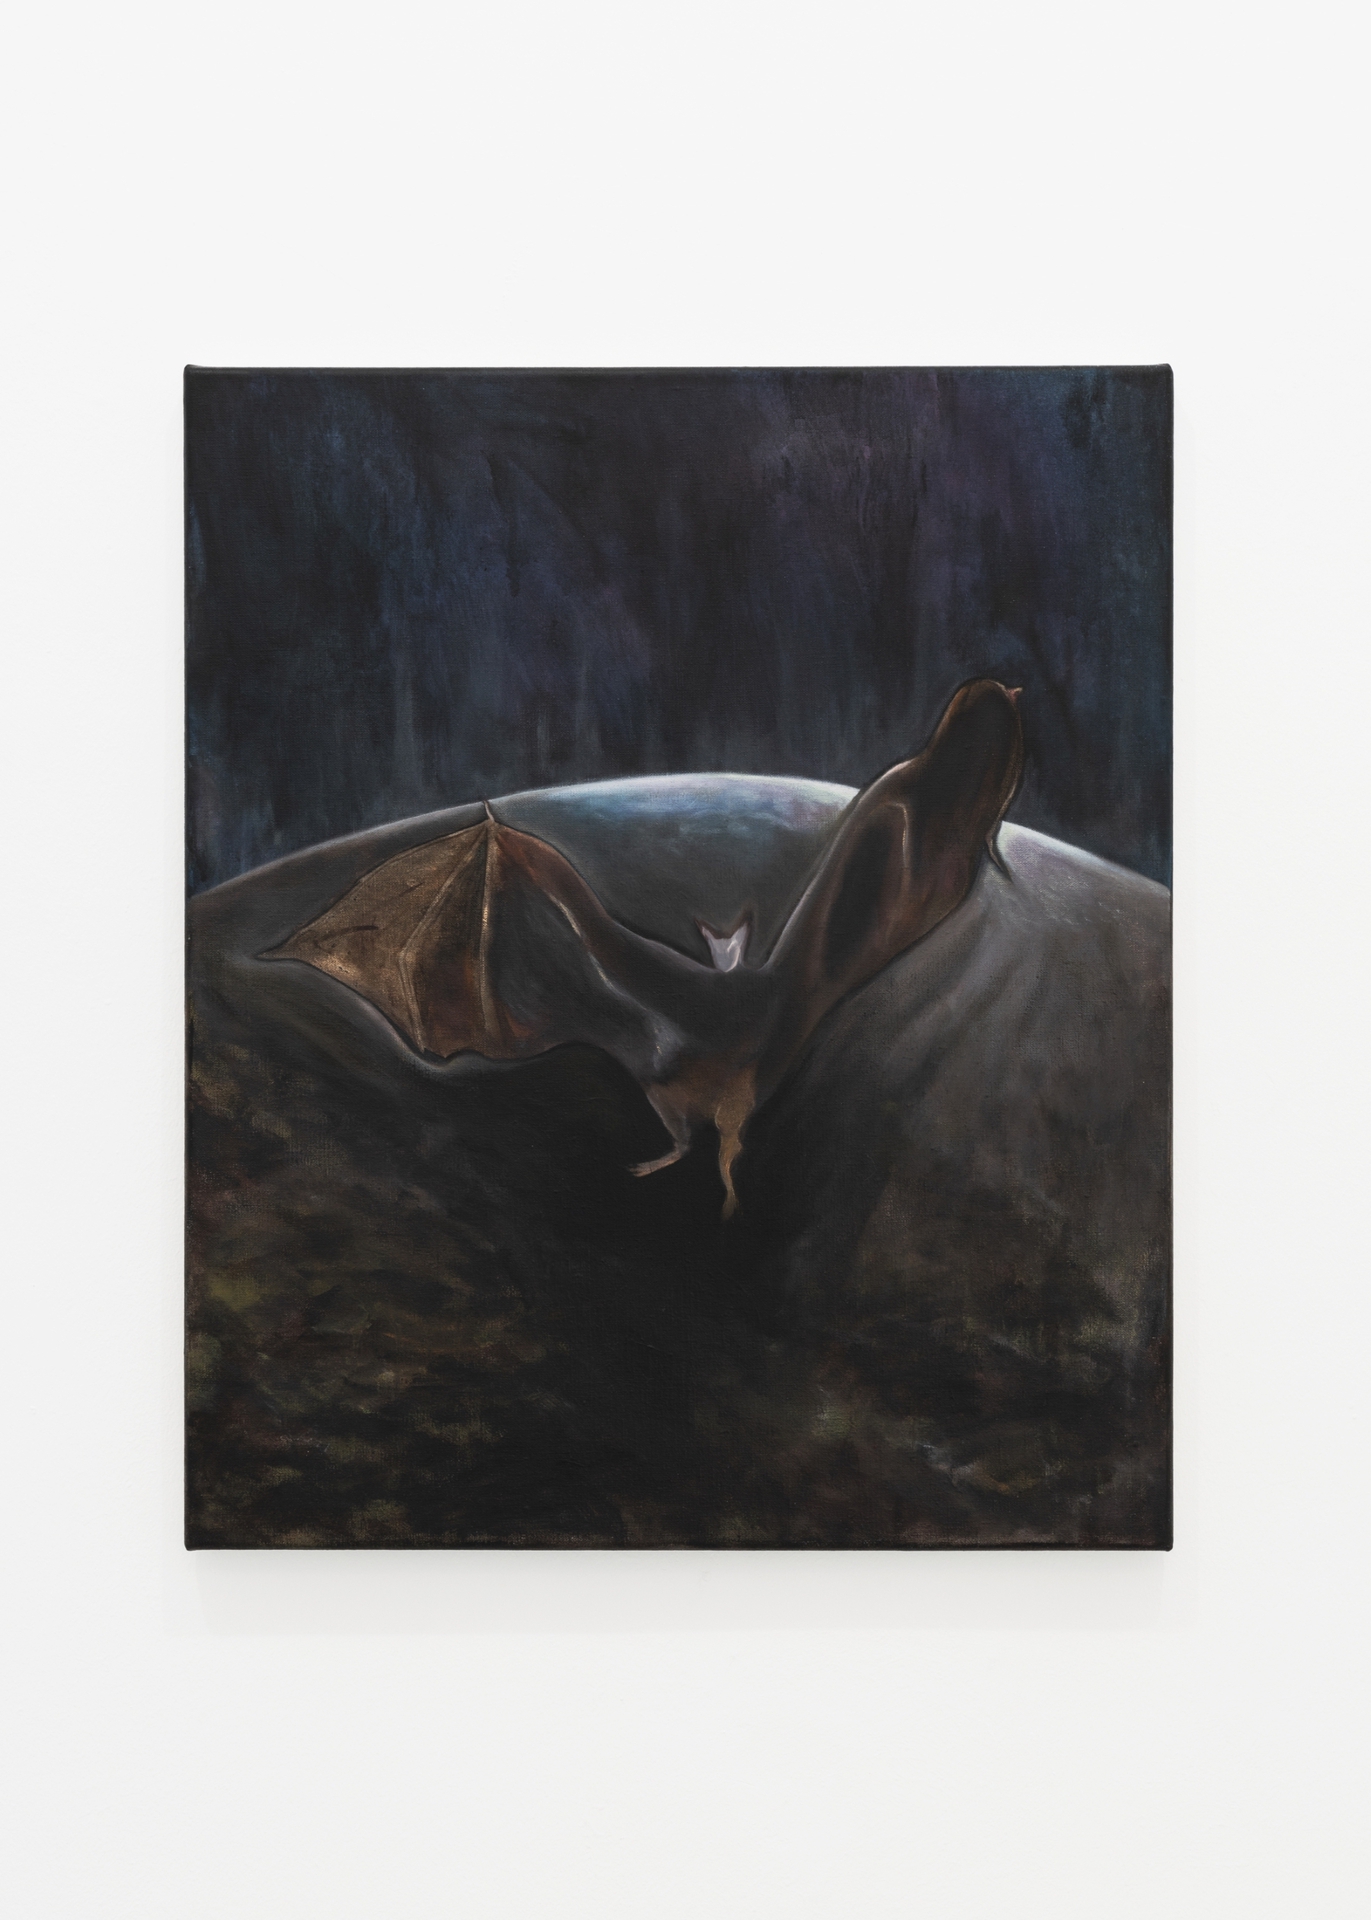 Bradley Davies, "untitled", oil on linen, 60 x 50 cm, 2020